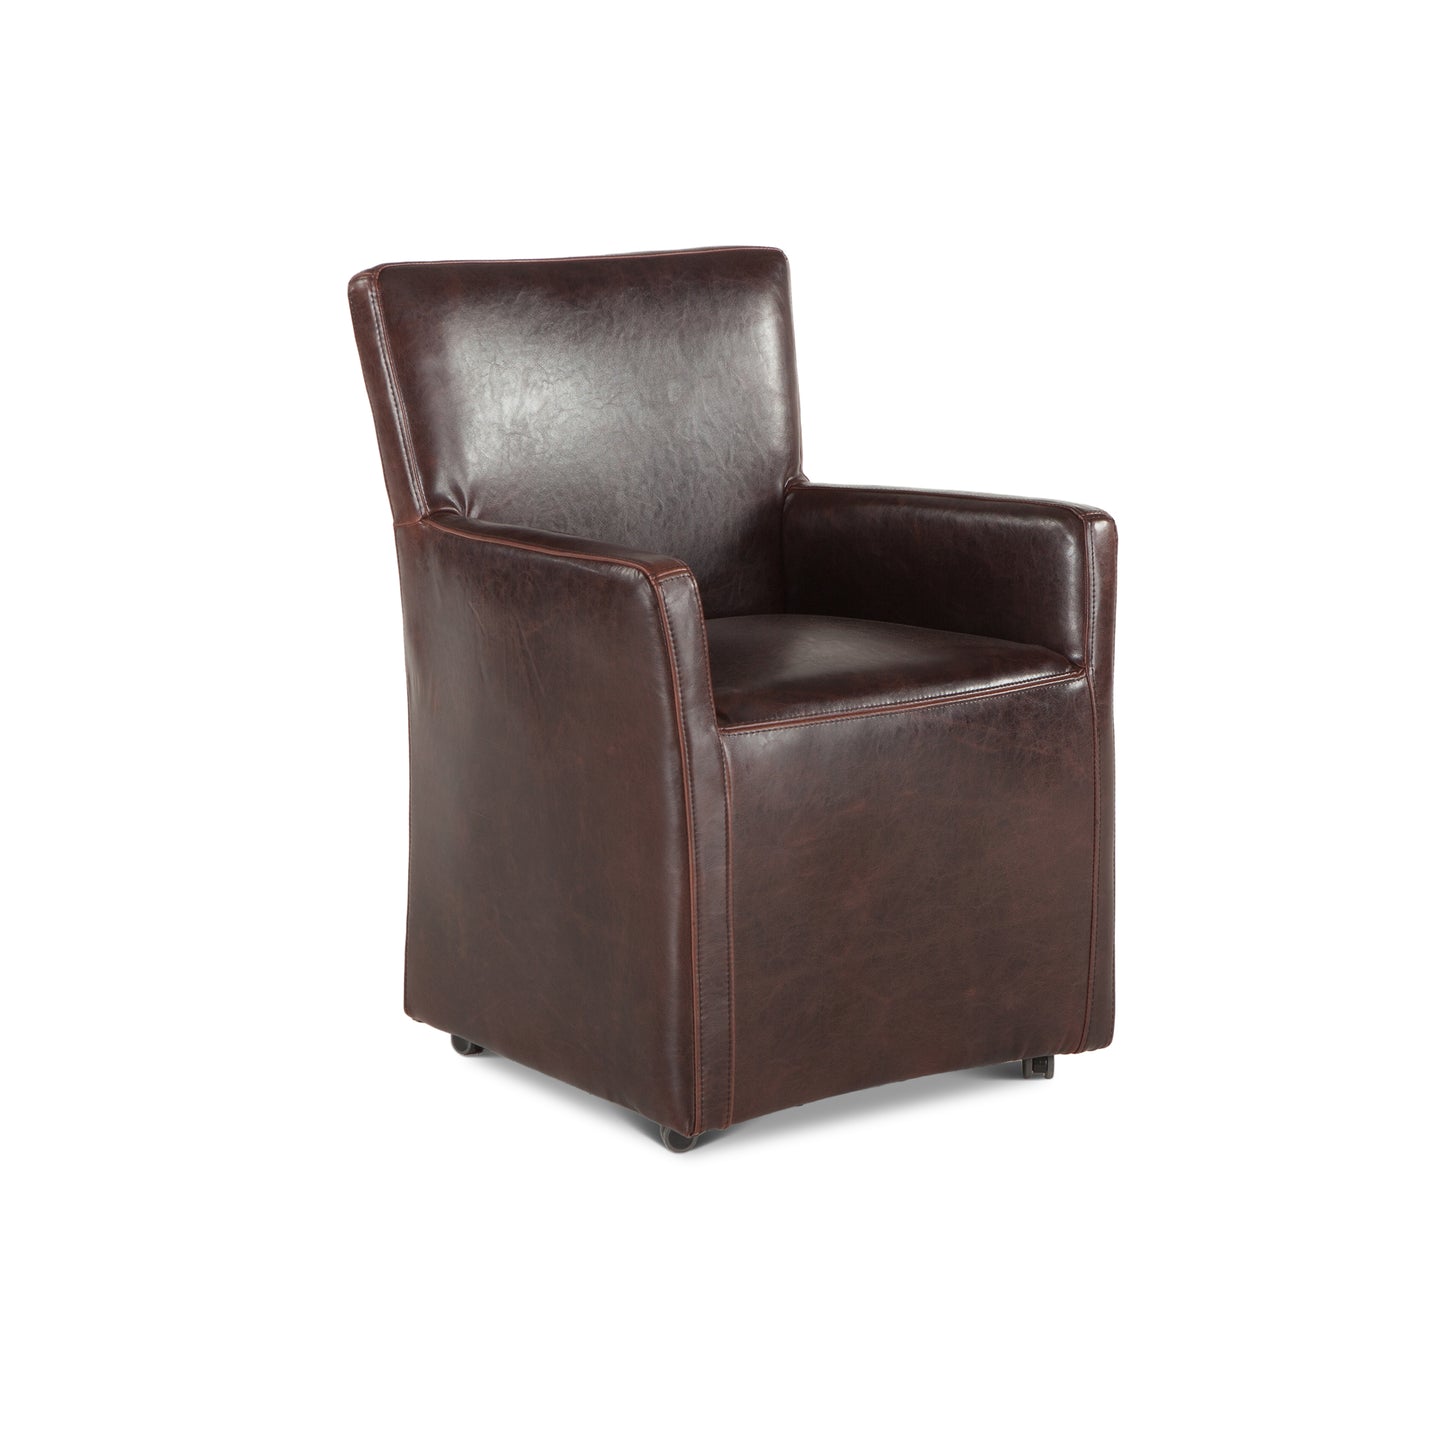 Peabody Brown Leather Wheeled Armchair SKU G201-646-530-47